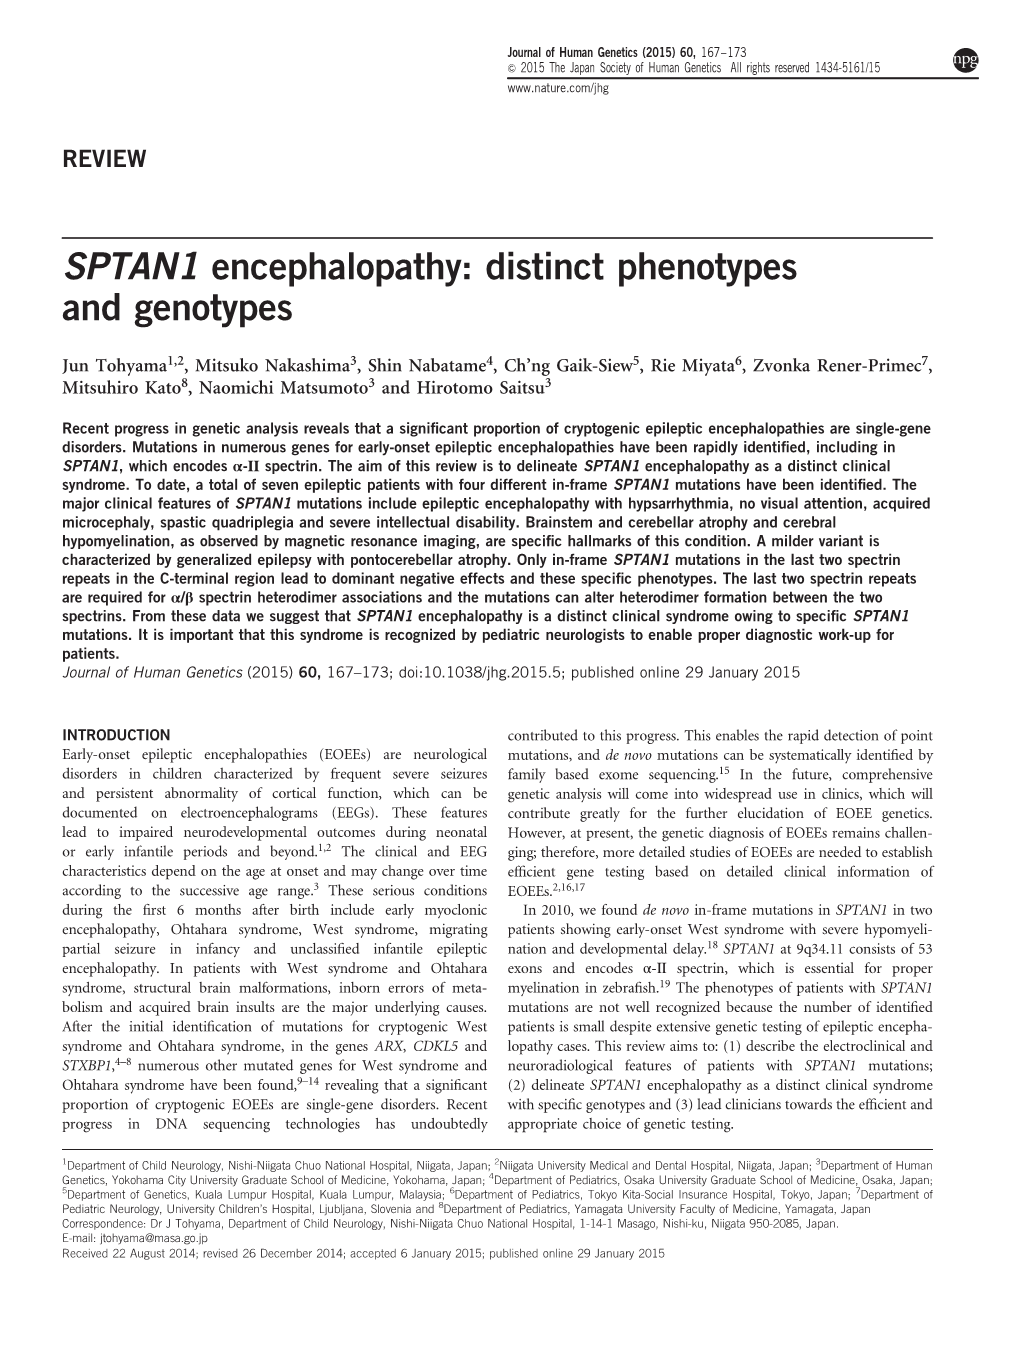 SPTAN1 Encephalopathy: Distinct Phenotypes and Genotypes